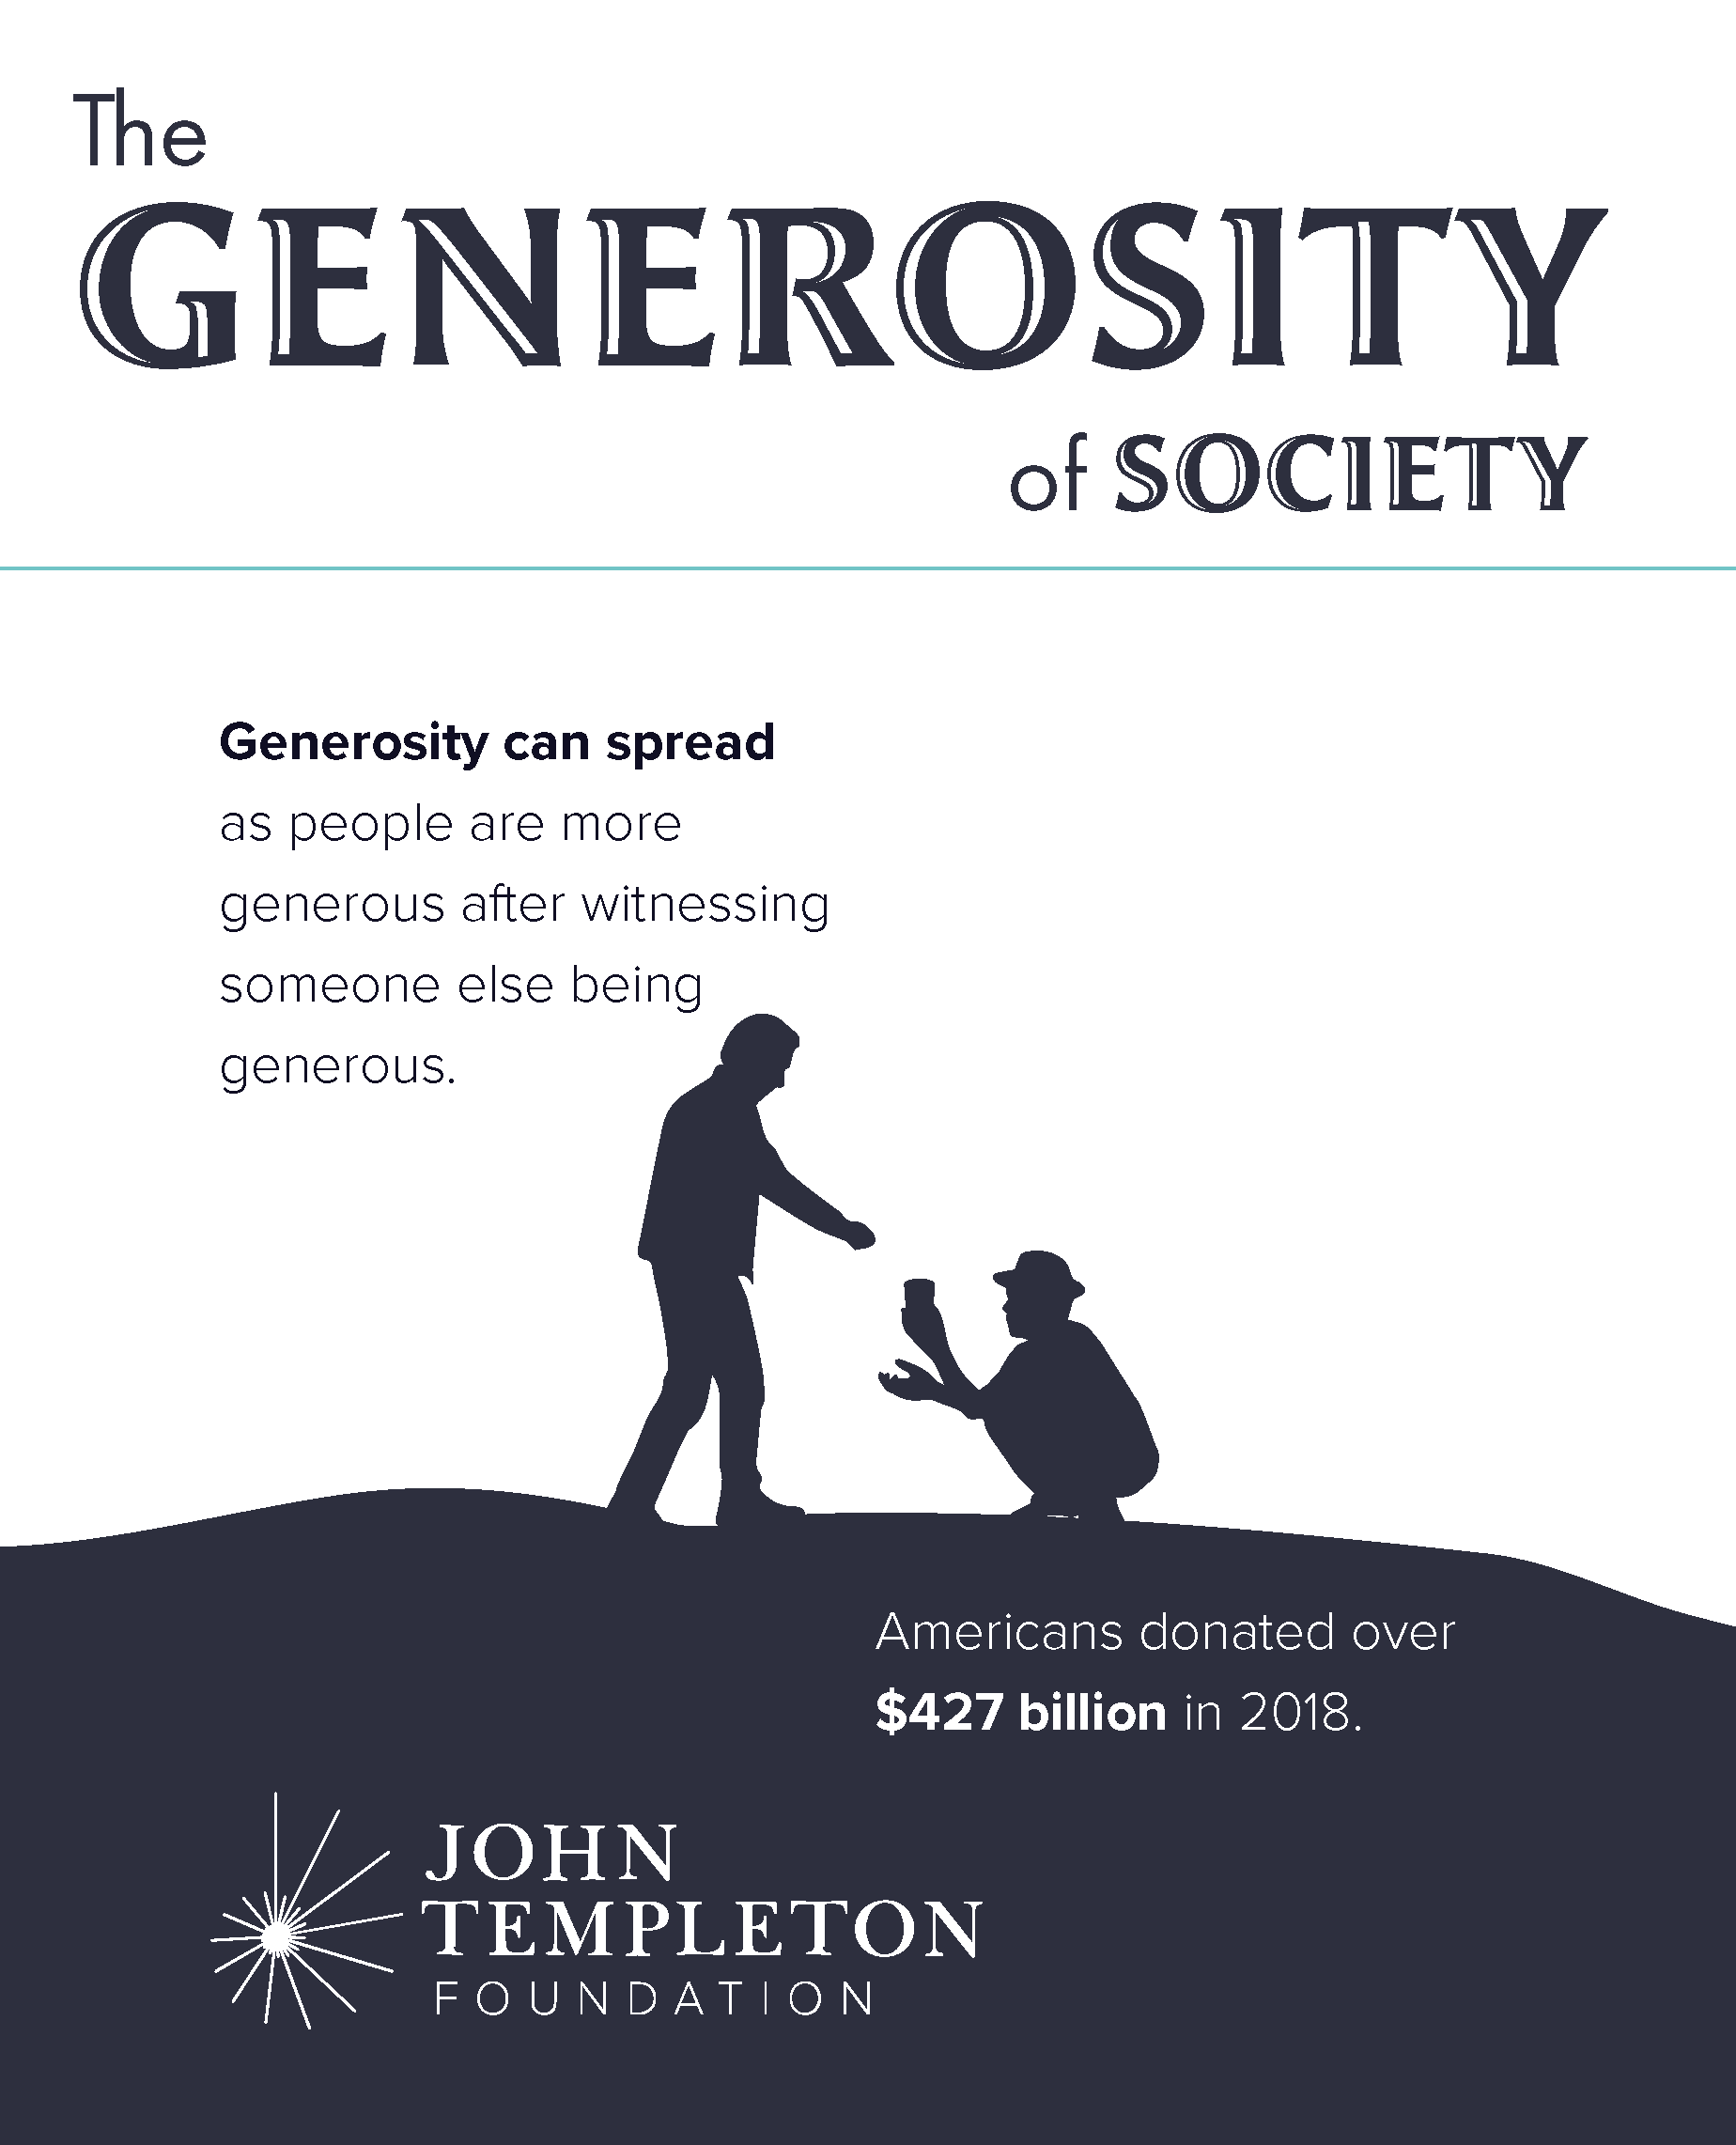 essay about generosity